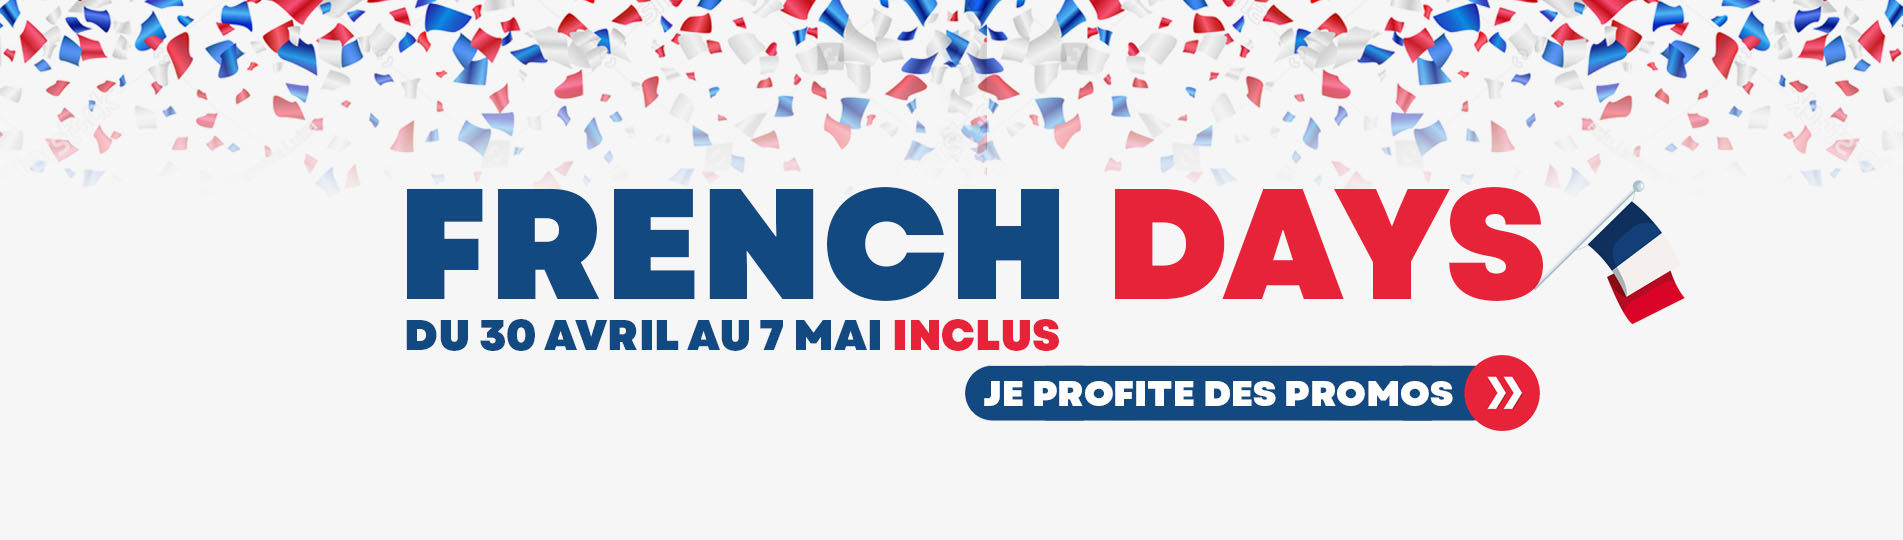 FRENCH_DAYS_-_ORDI_NEW